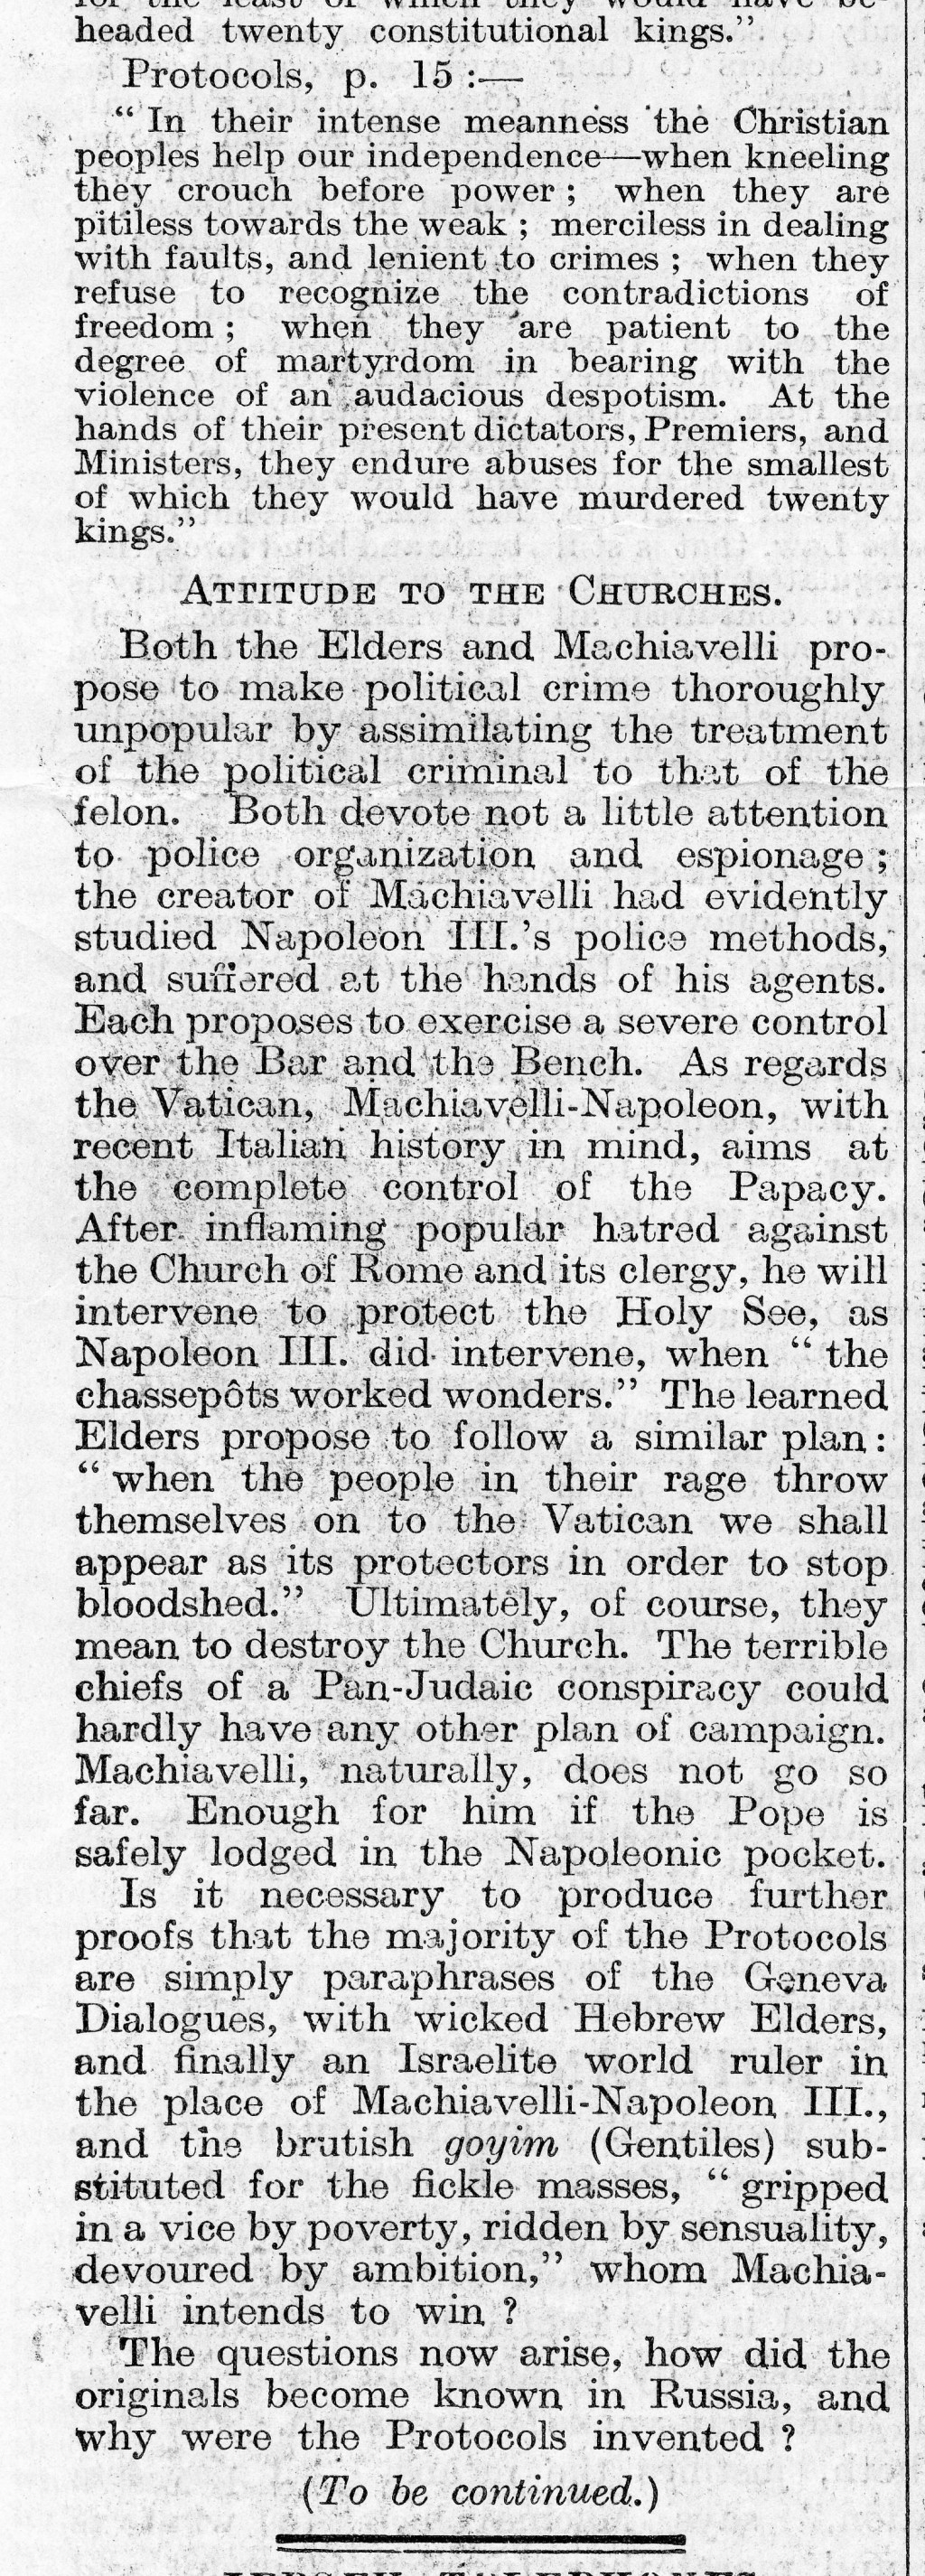 The Times, August 17, 1921 [LCID: 2006u83u]